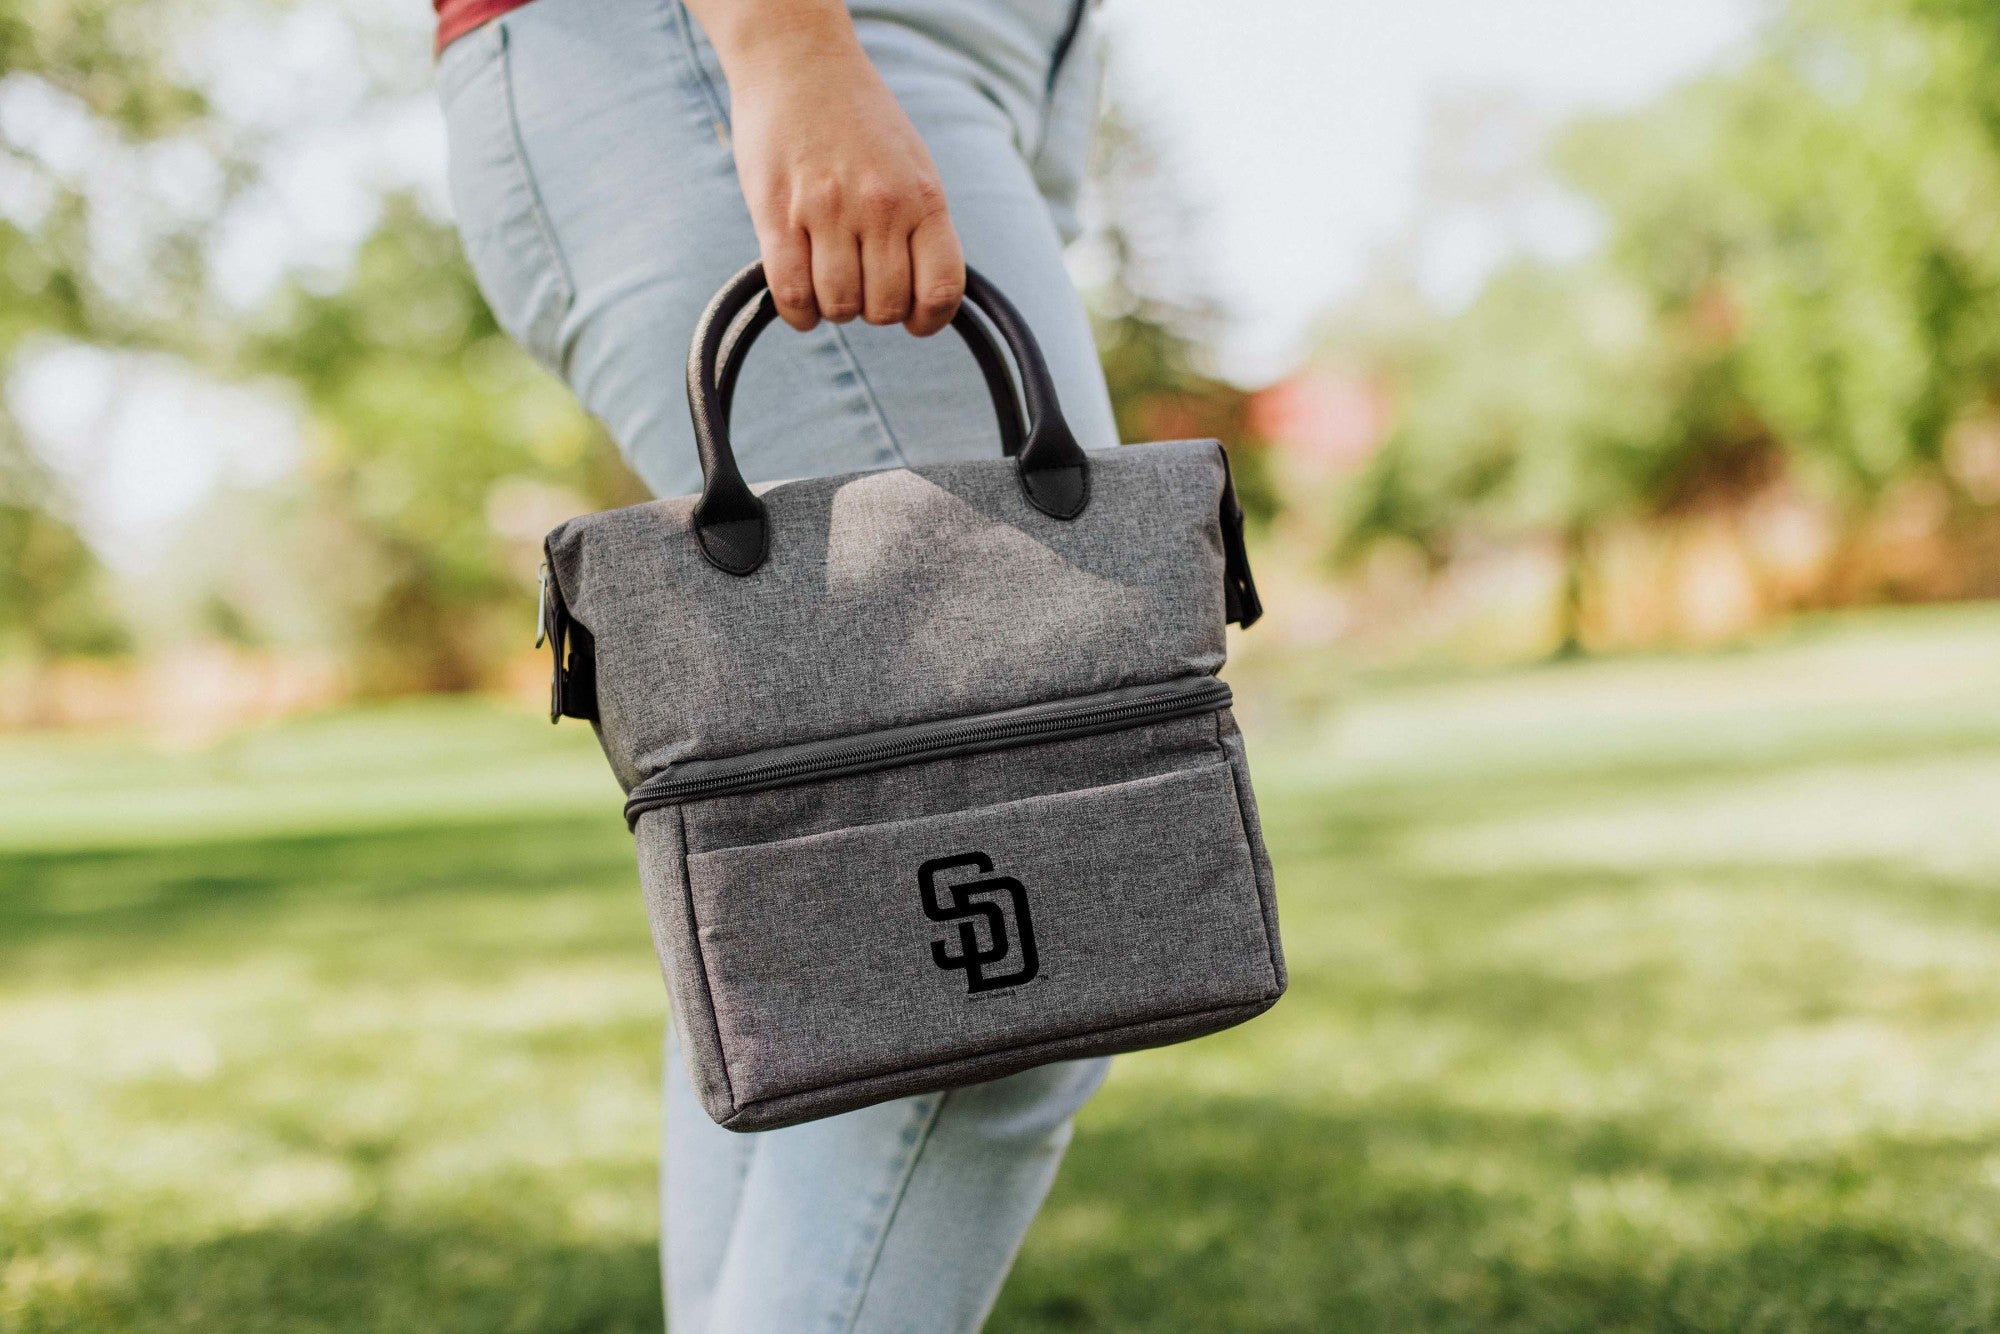 San Diego Padres - Urban Lunch Bag Cooler